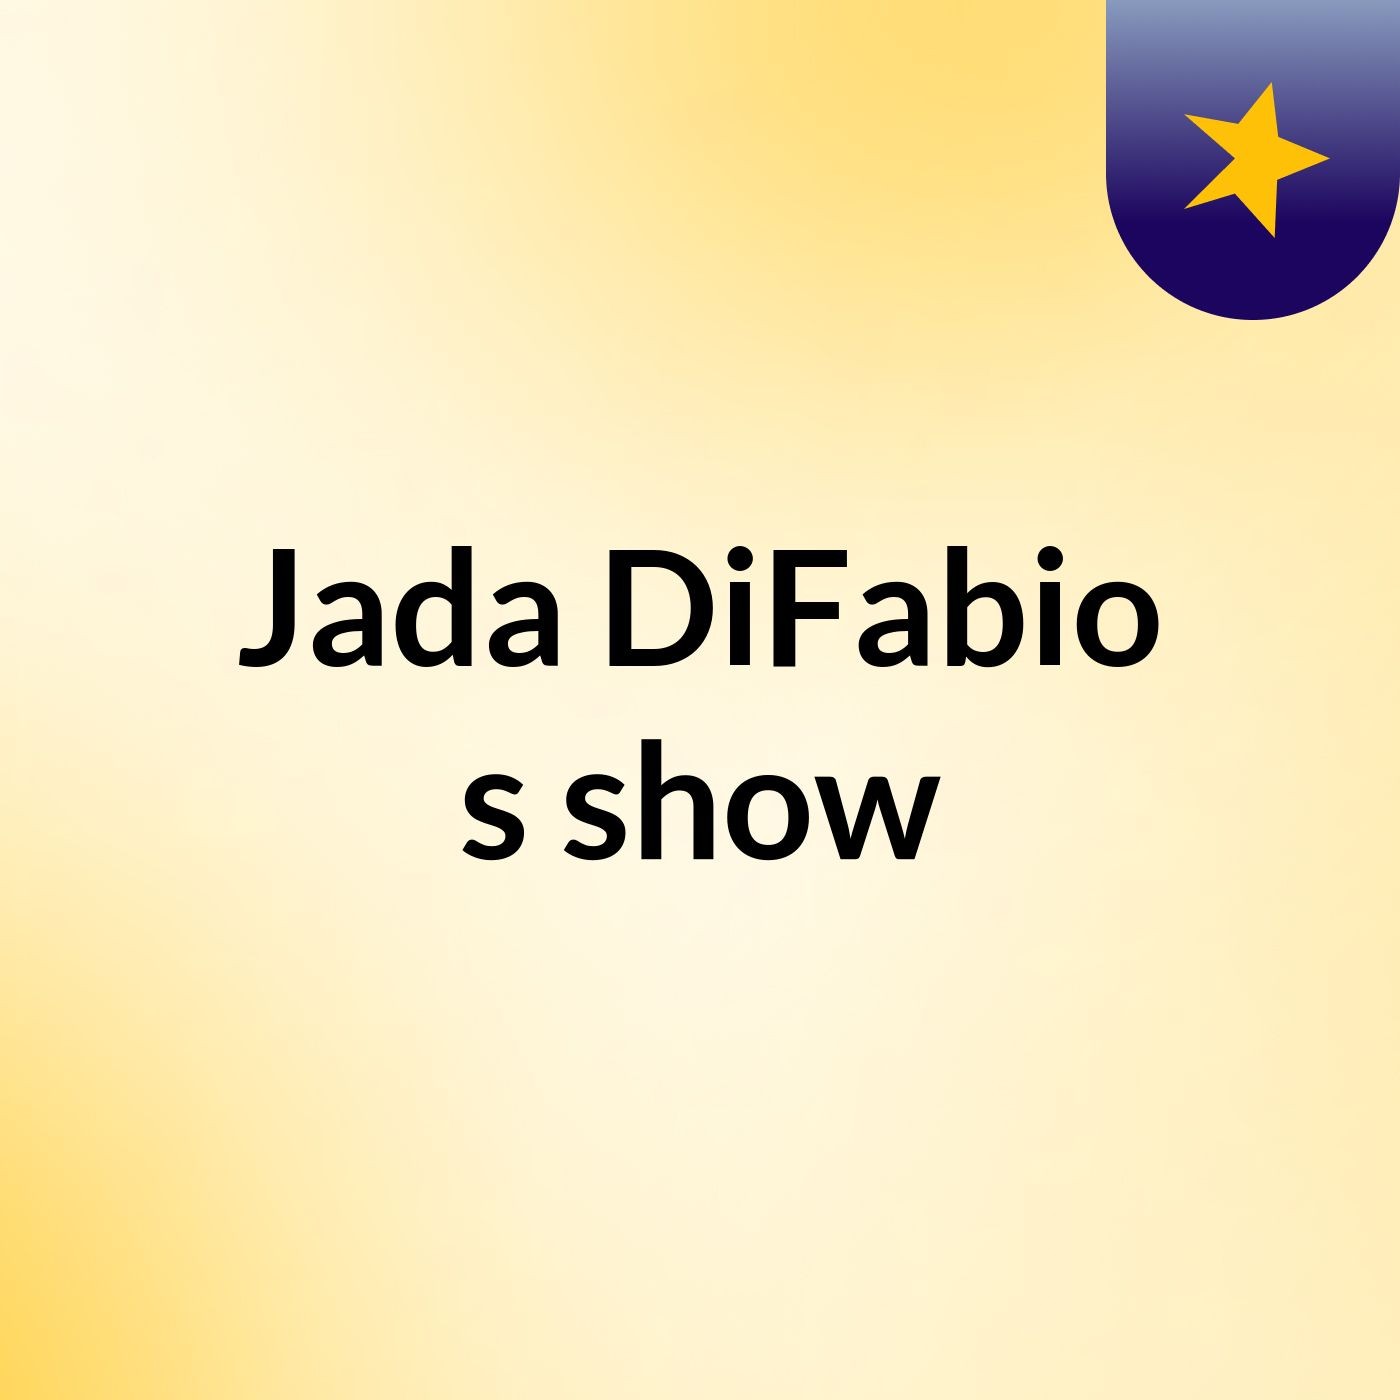 Episode 3 - Jada DiFabio's show